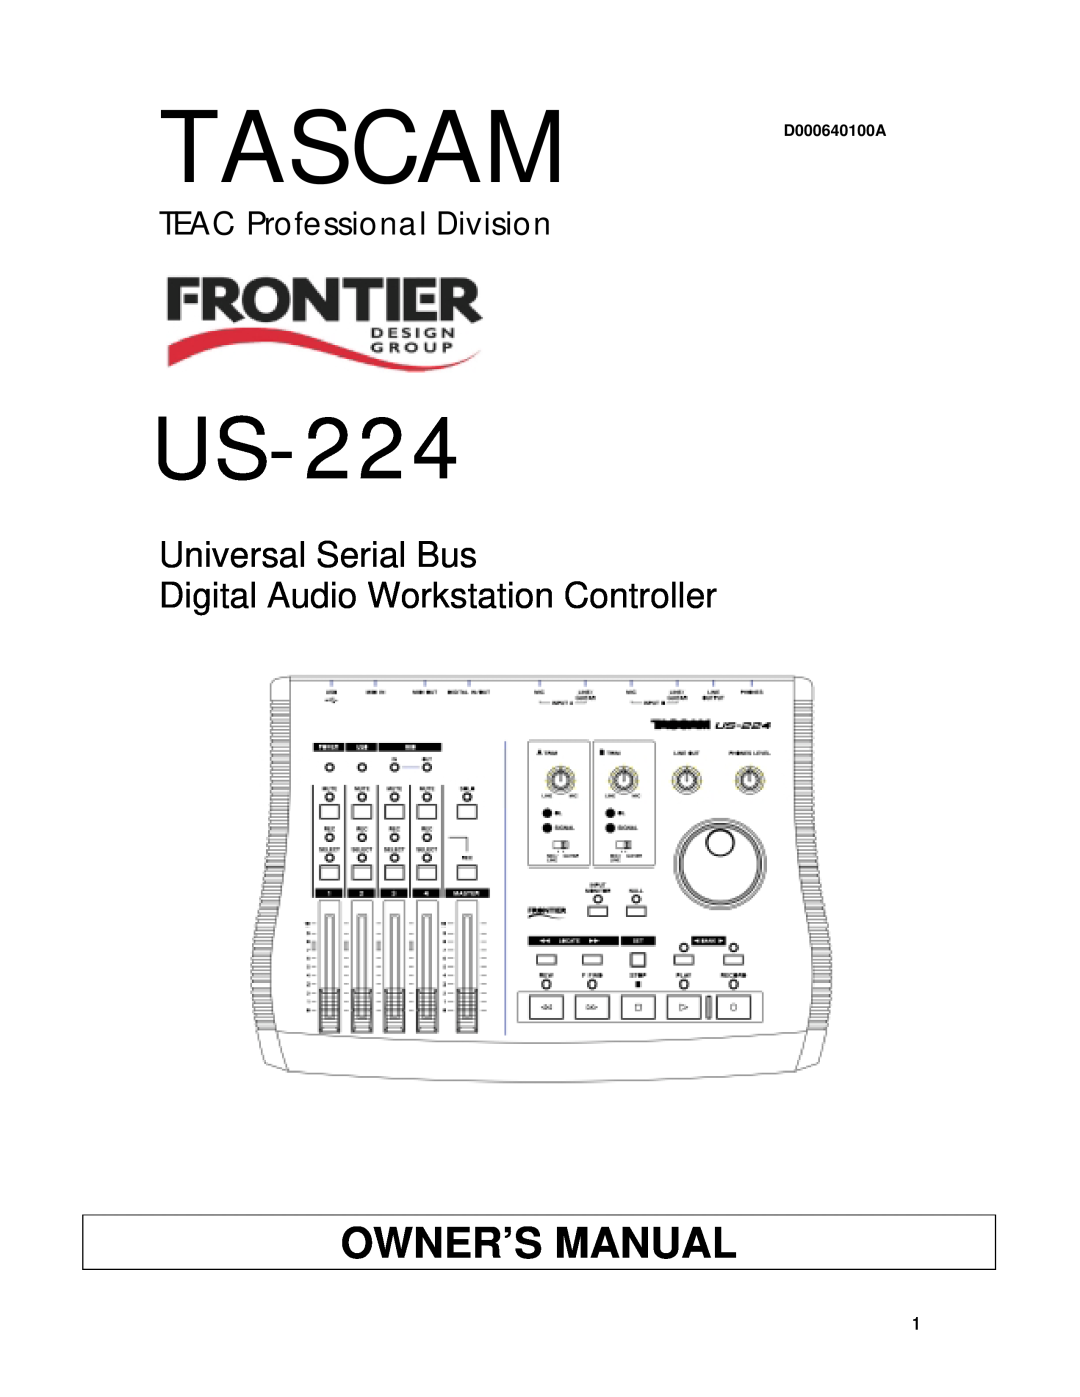 Tascam US-224 owner manual Universal Serial Bus, Digital Audio Workstation Controller, TEAC Professional Division 